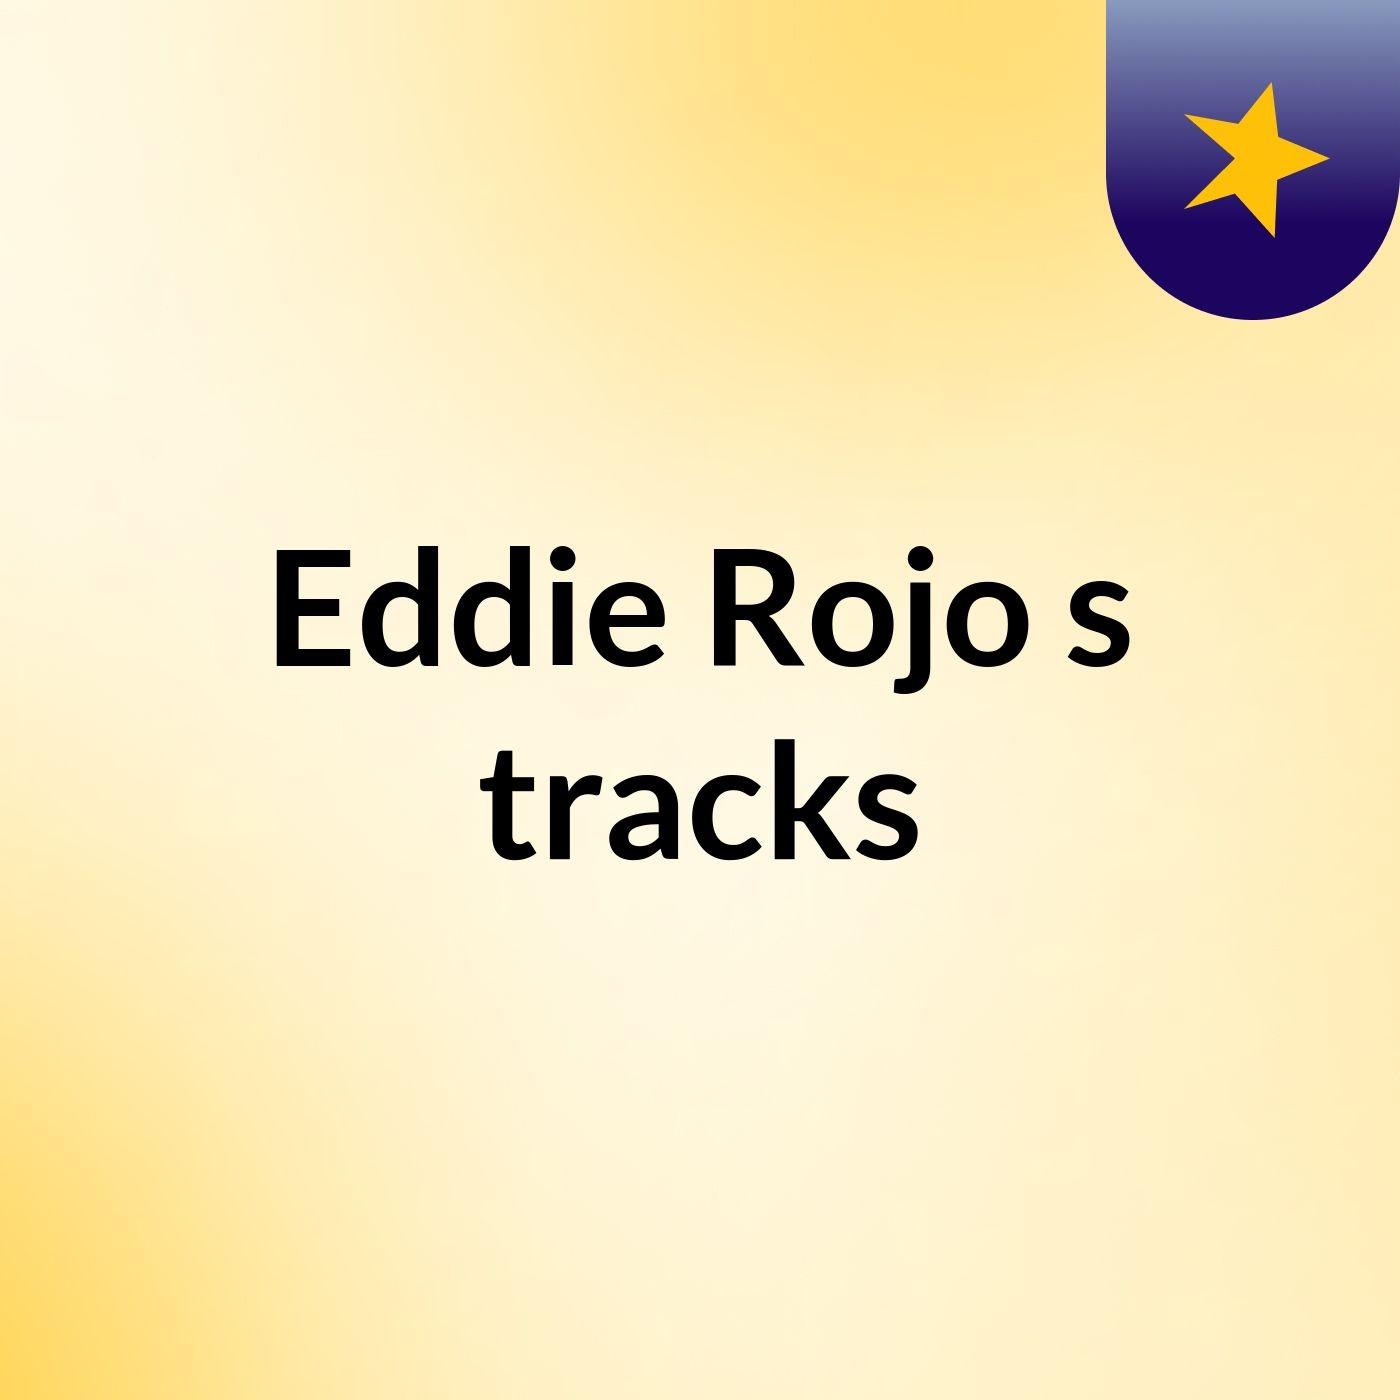 Eddie Rojo's tracks